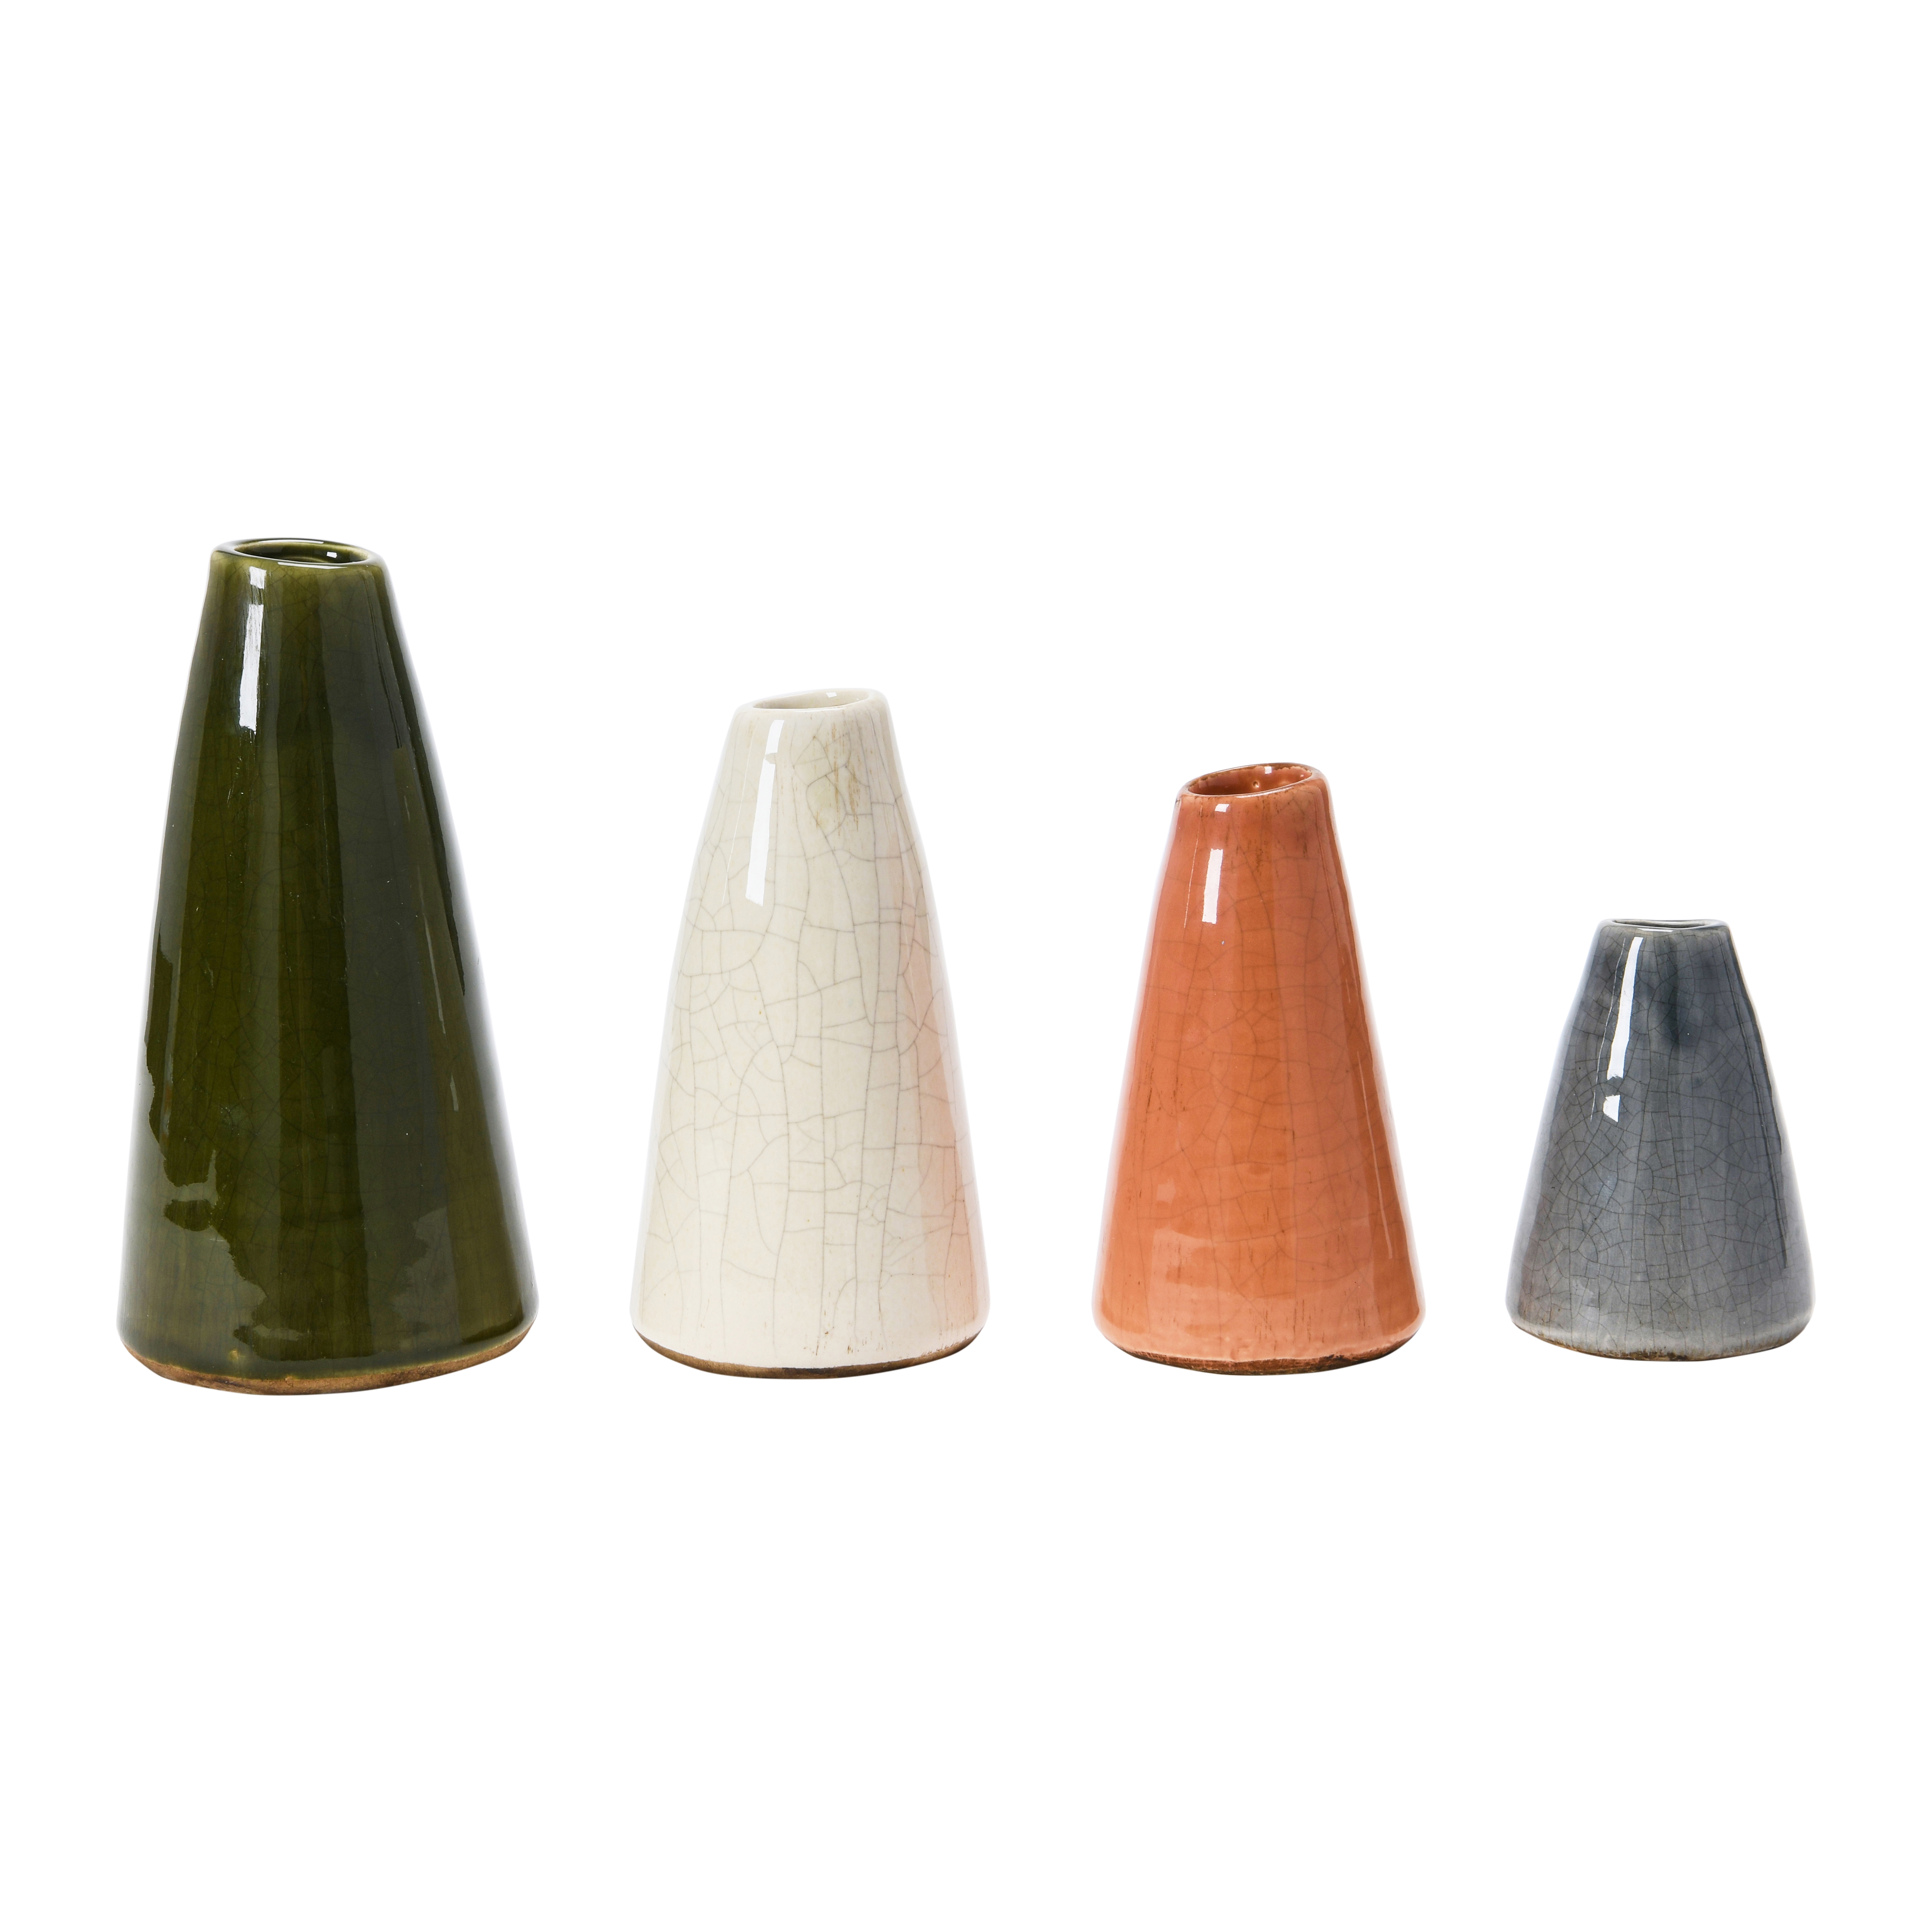 Conical Stoneware Bud Vases in Crackle Glaze, Olive/Terracotta Tones, Set of 4 - Image 0